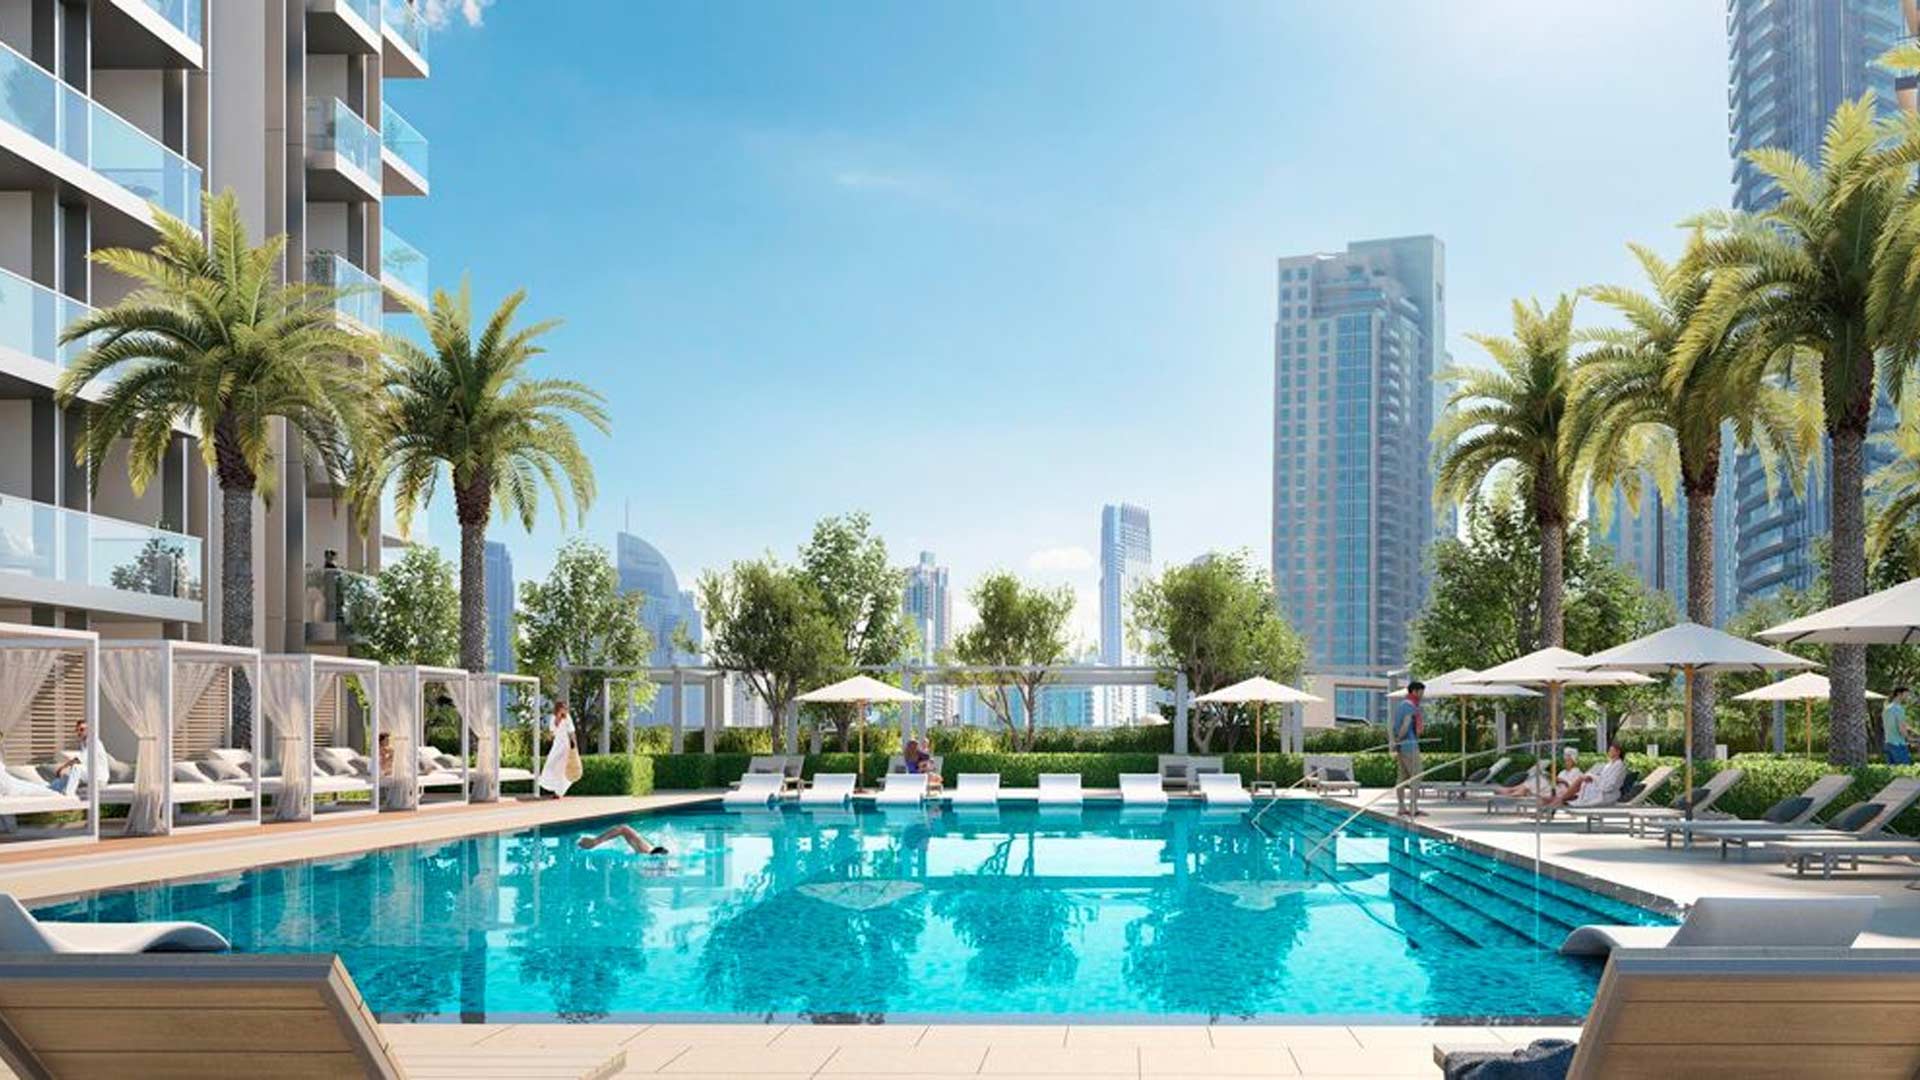 ST.REGIS RESIDENCES by Emaar Properties in Downtown Dubai, Dubai - 2